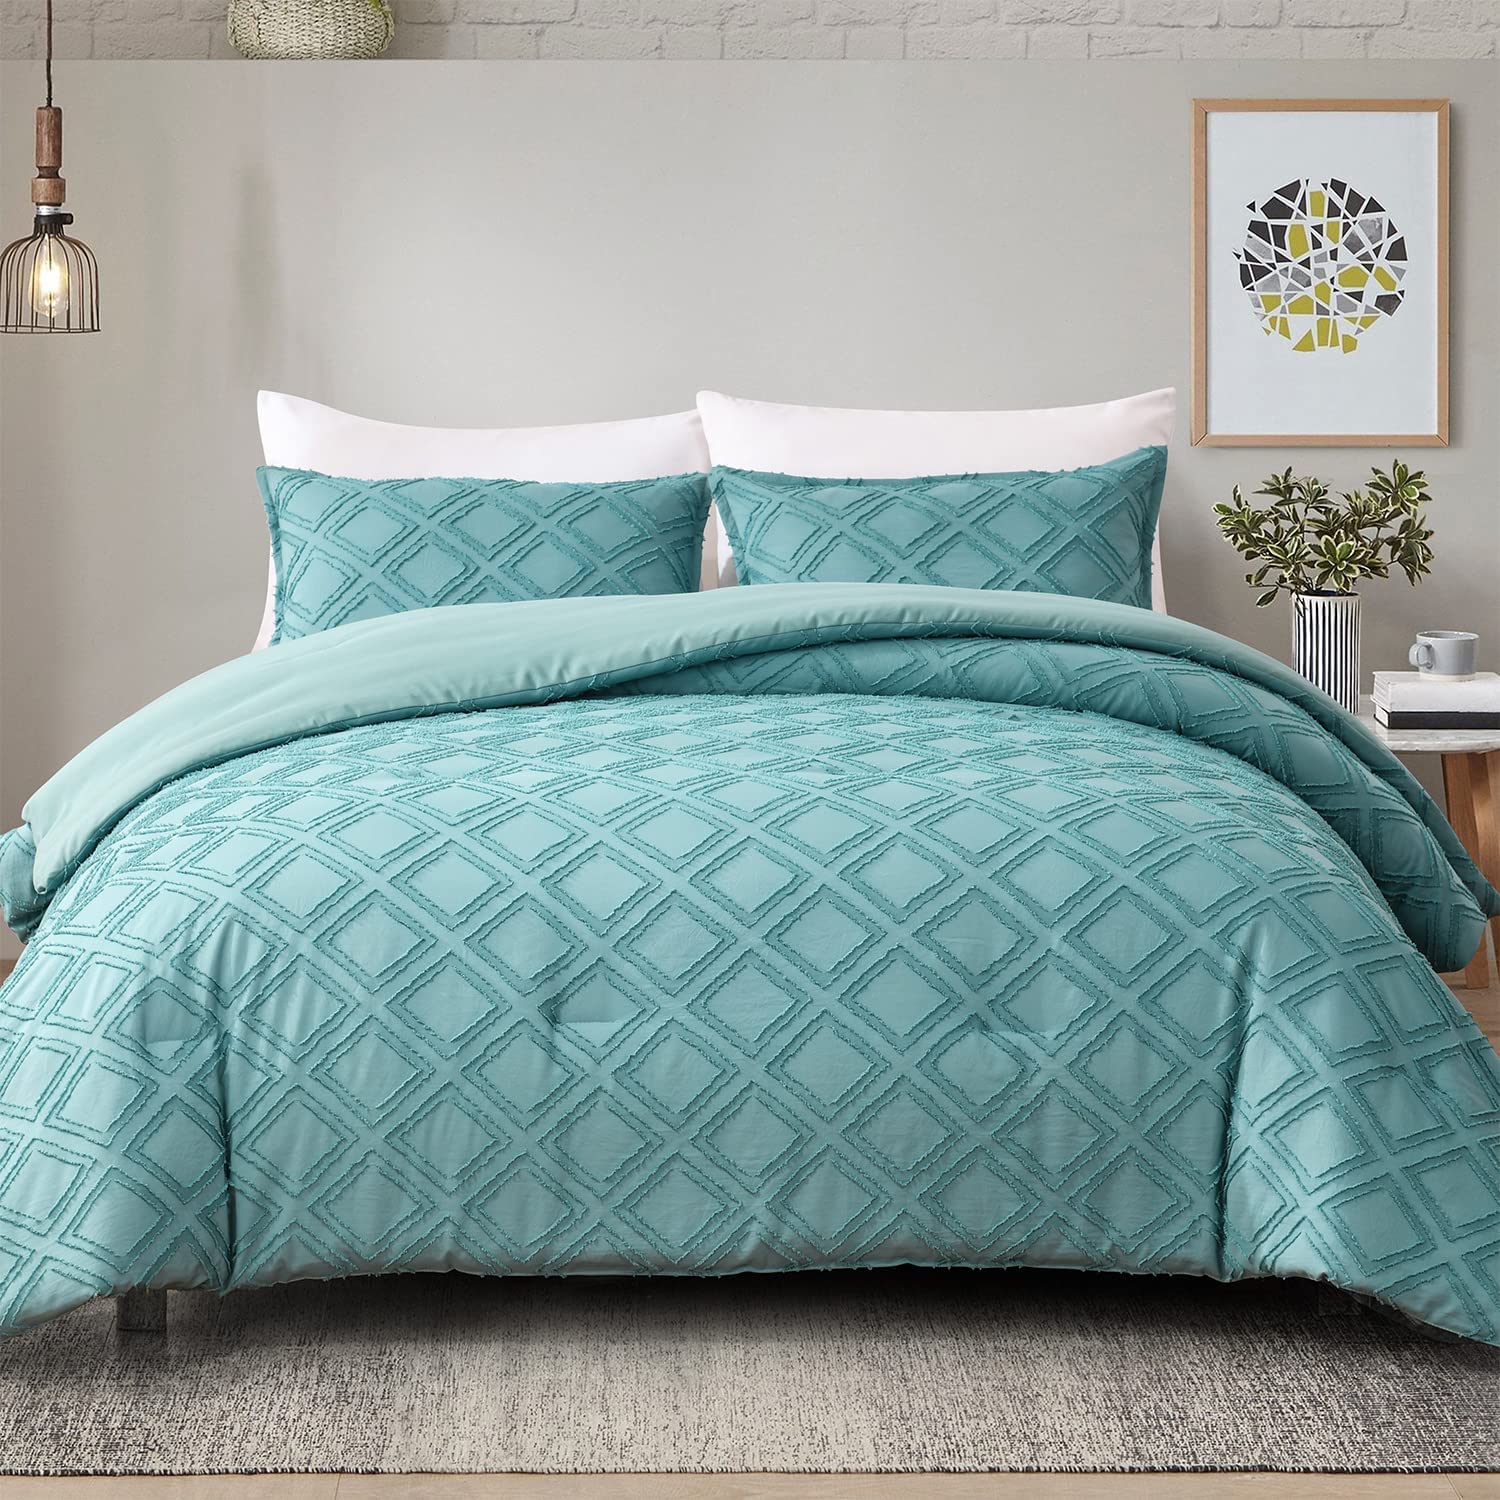 Wellco 3 Piece Comforter Bedding Set- All Season Bedding Comforter Set, Checkered Tufted Ultra Soft Polyester Bedding Comforters